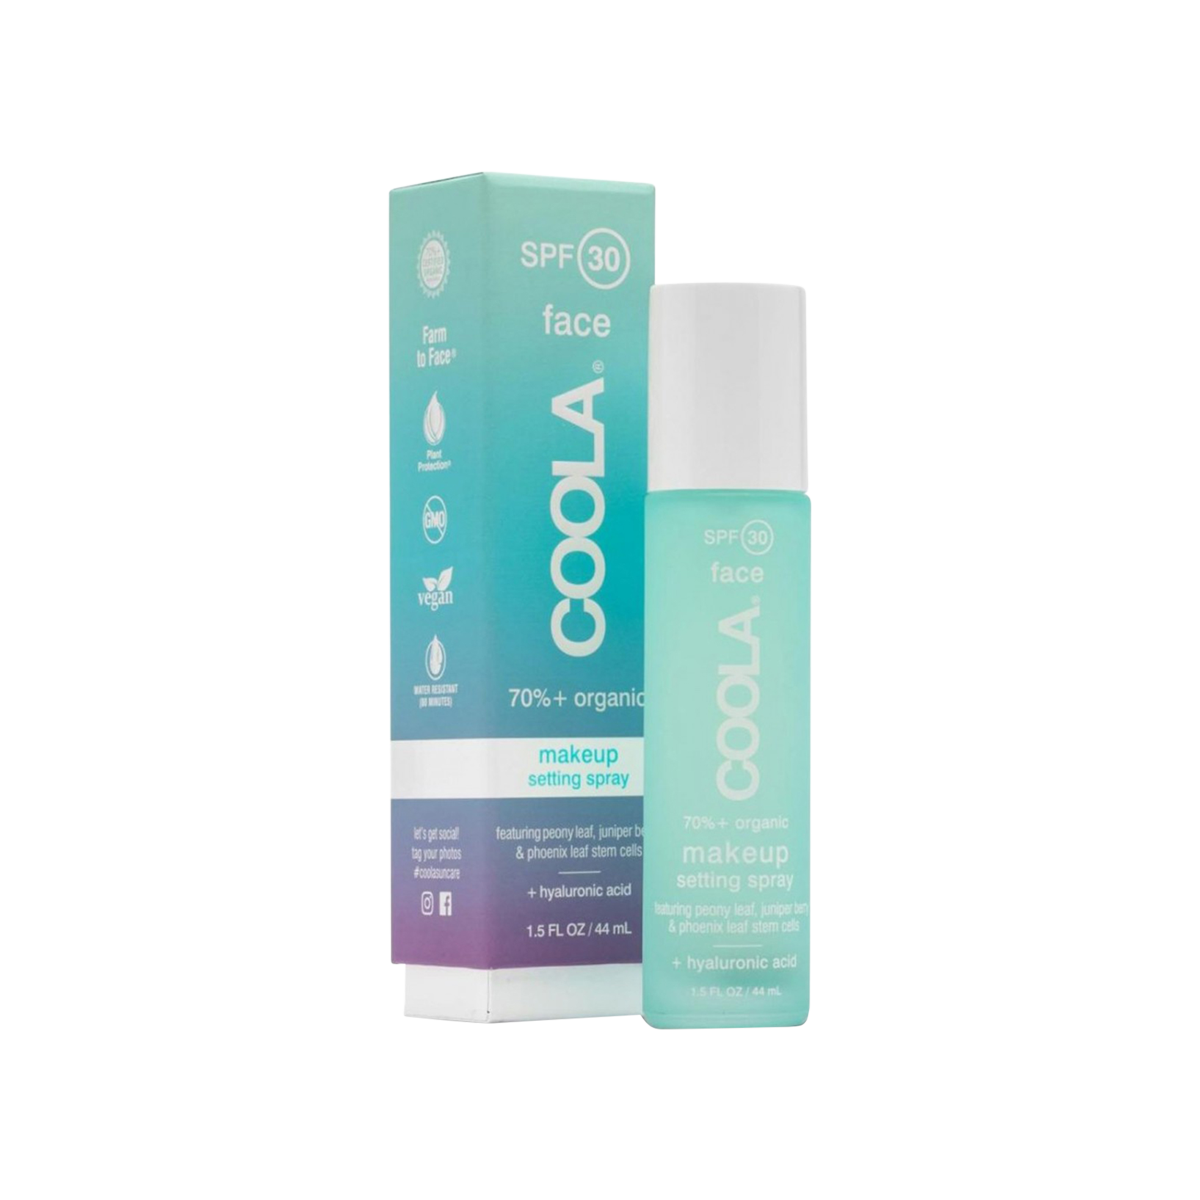 COOLA Suncare - Makeup Setting Spray SPF 30